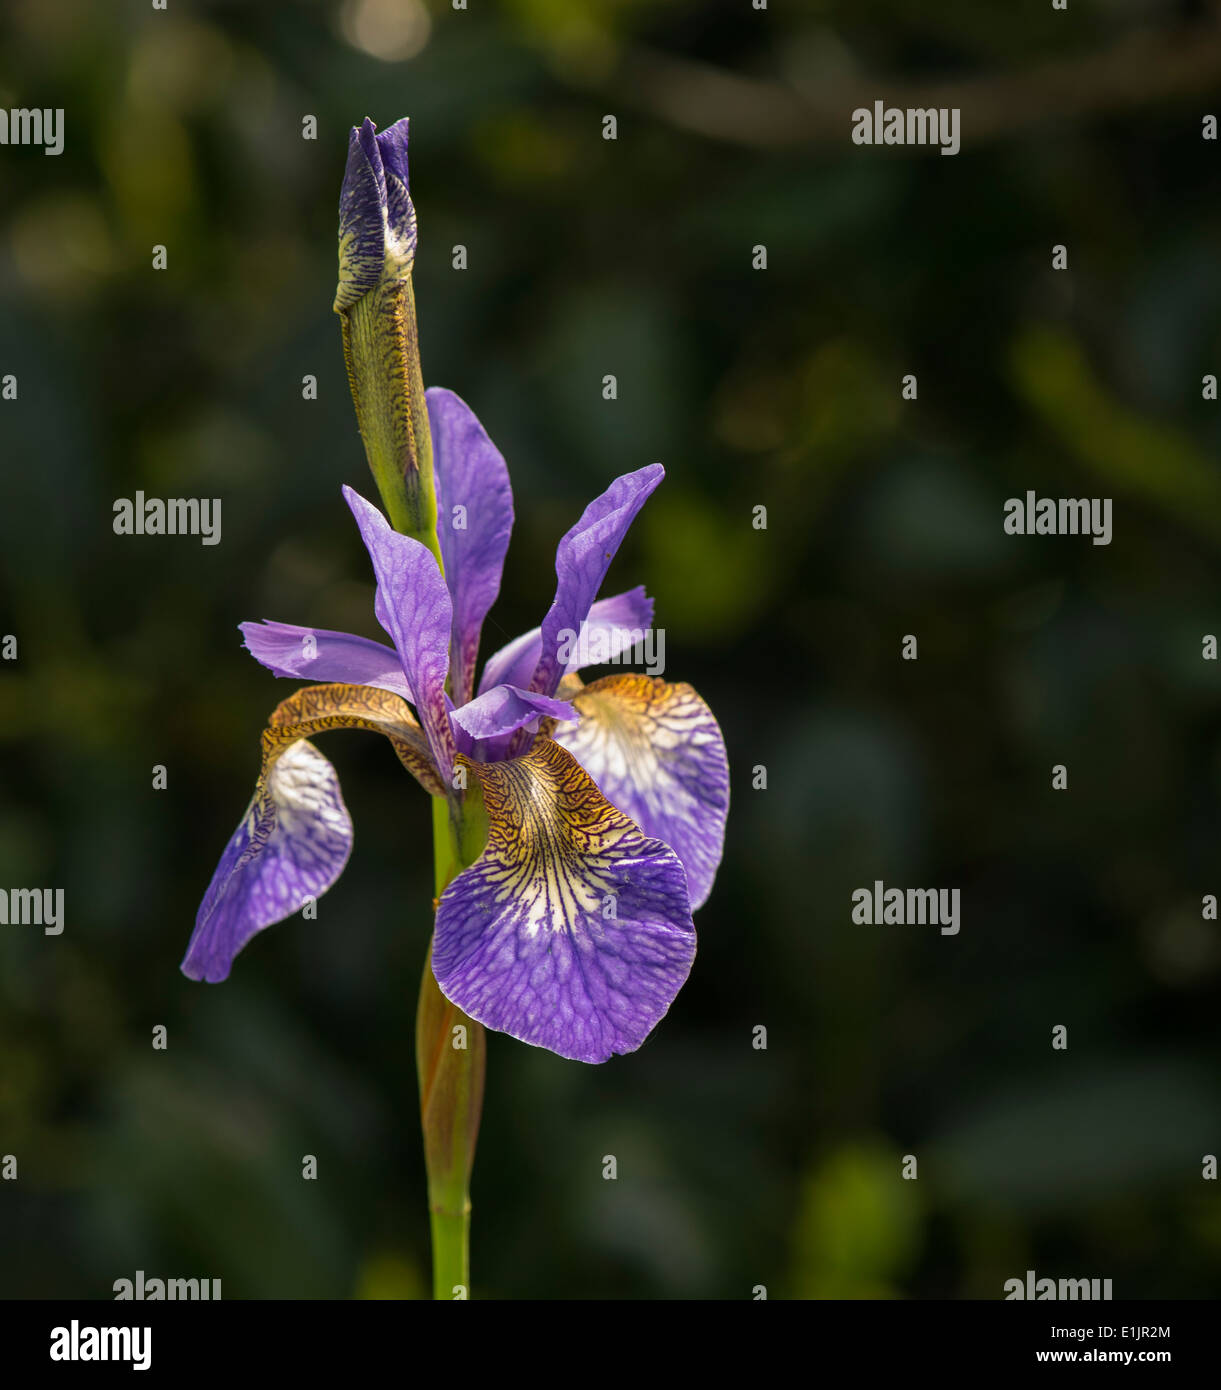 A purple Iris flower head in the sun Stock Photo